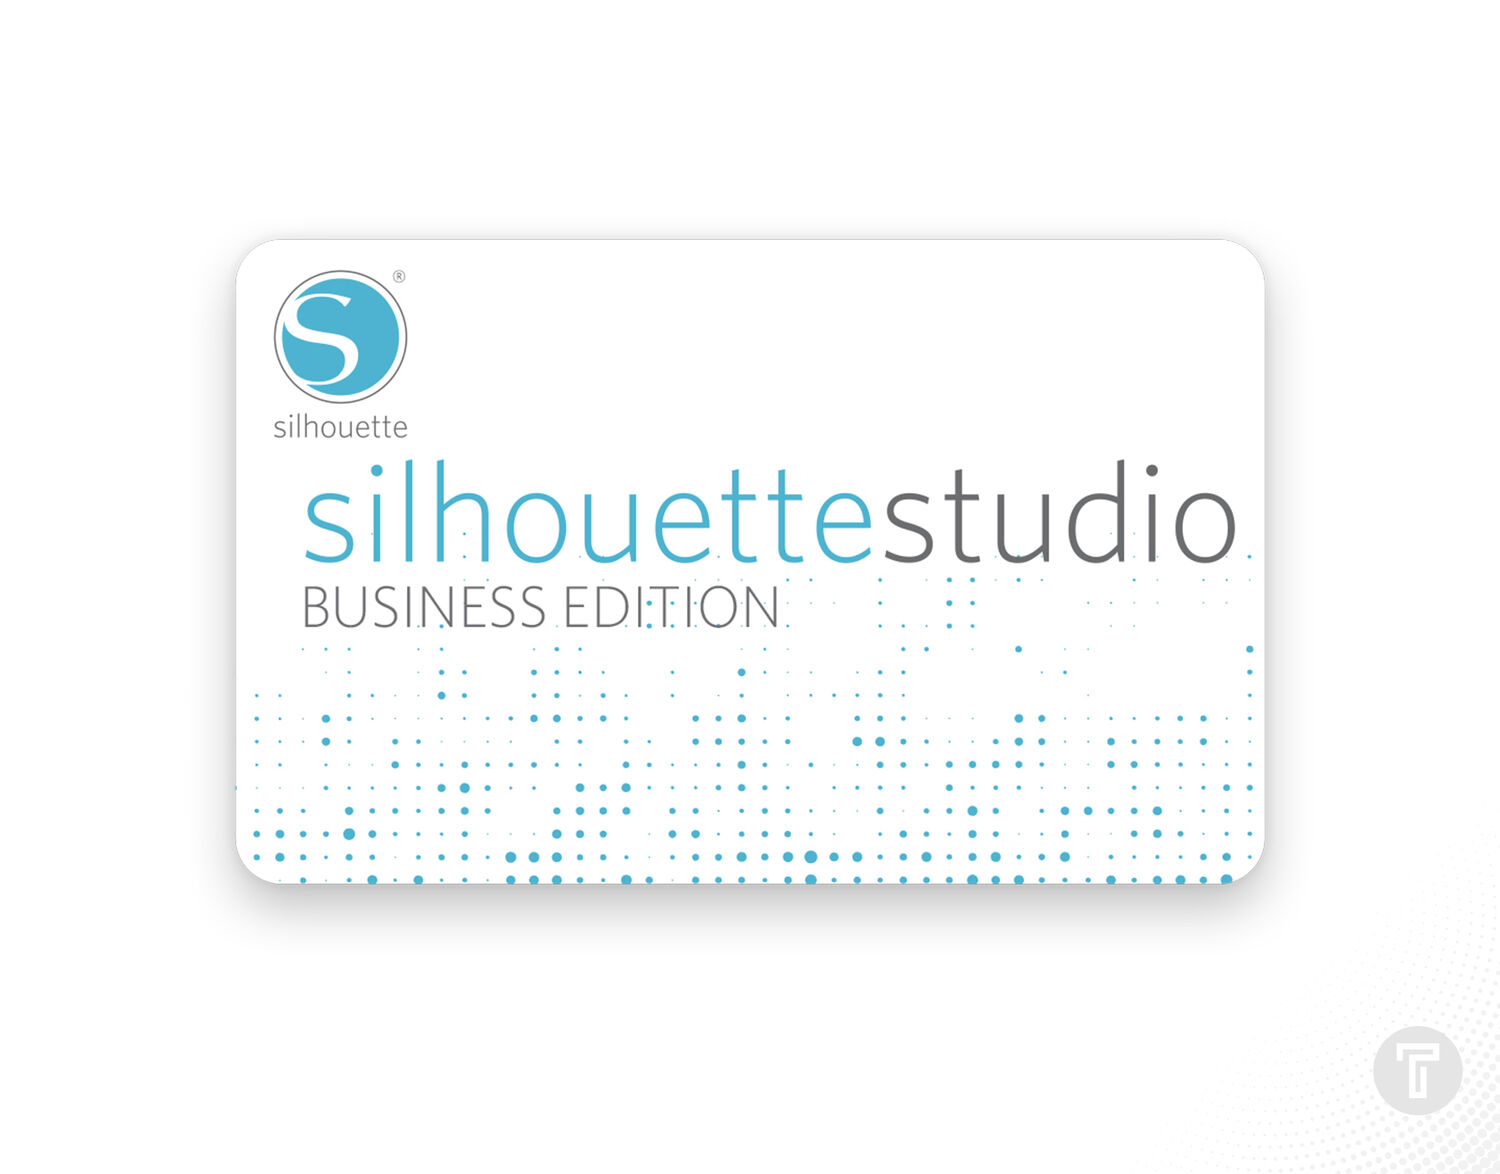 silhouette studio customer service